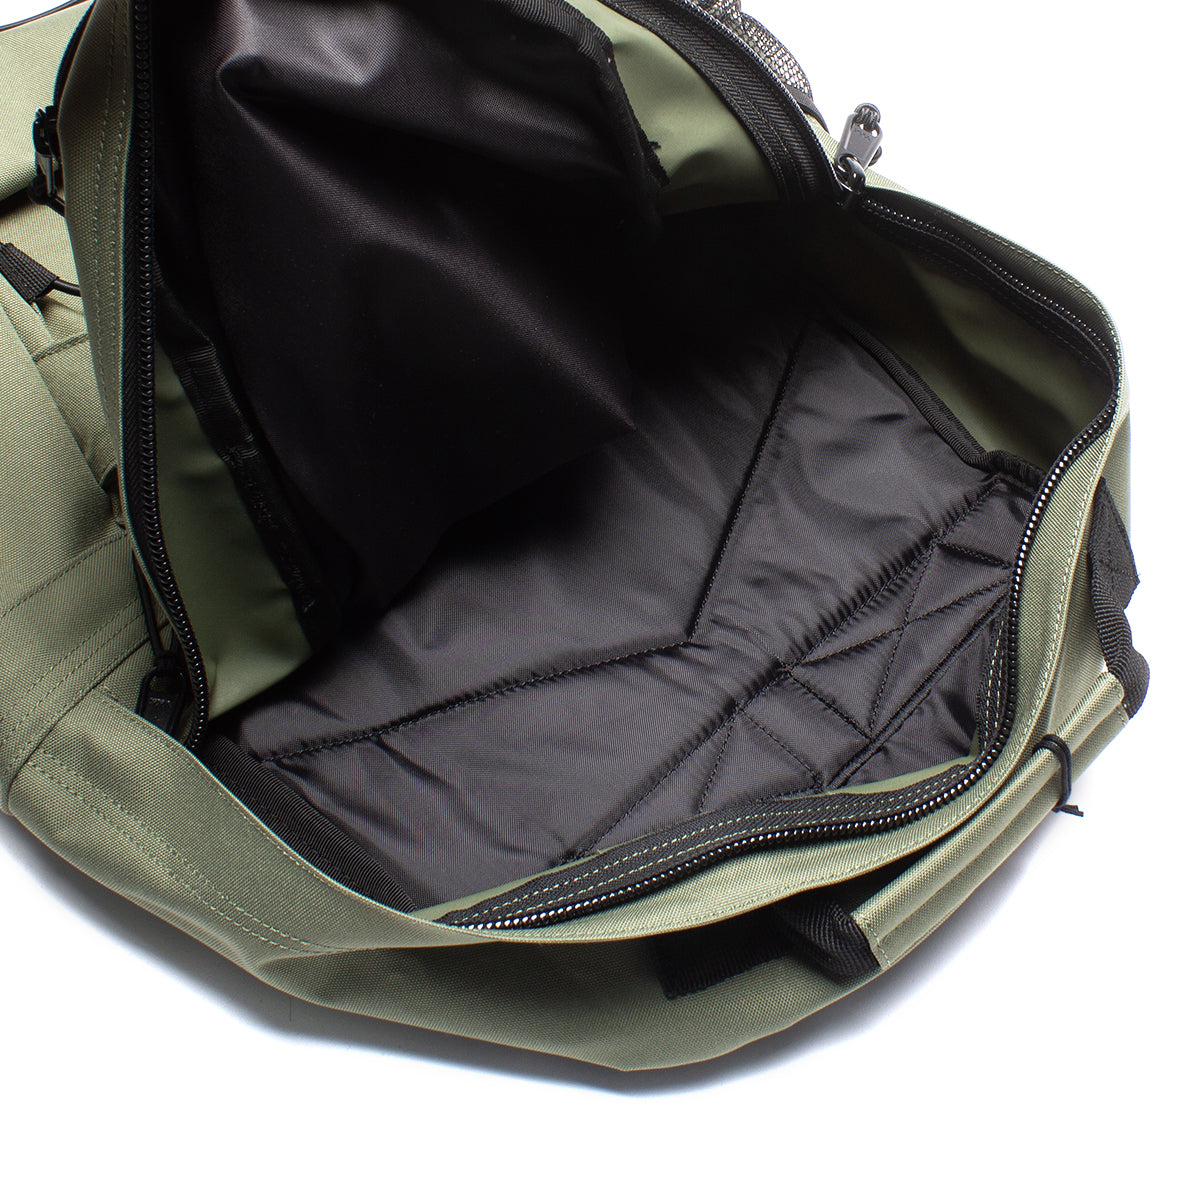 Carhartt WIP | Kickflip Backpack Style # I031468-667 Color : Dollar Green